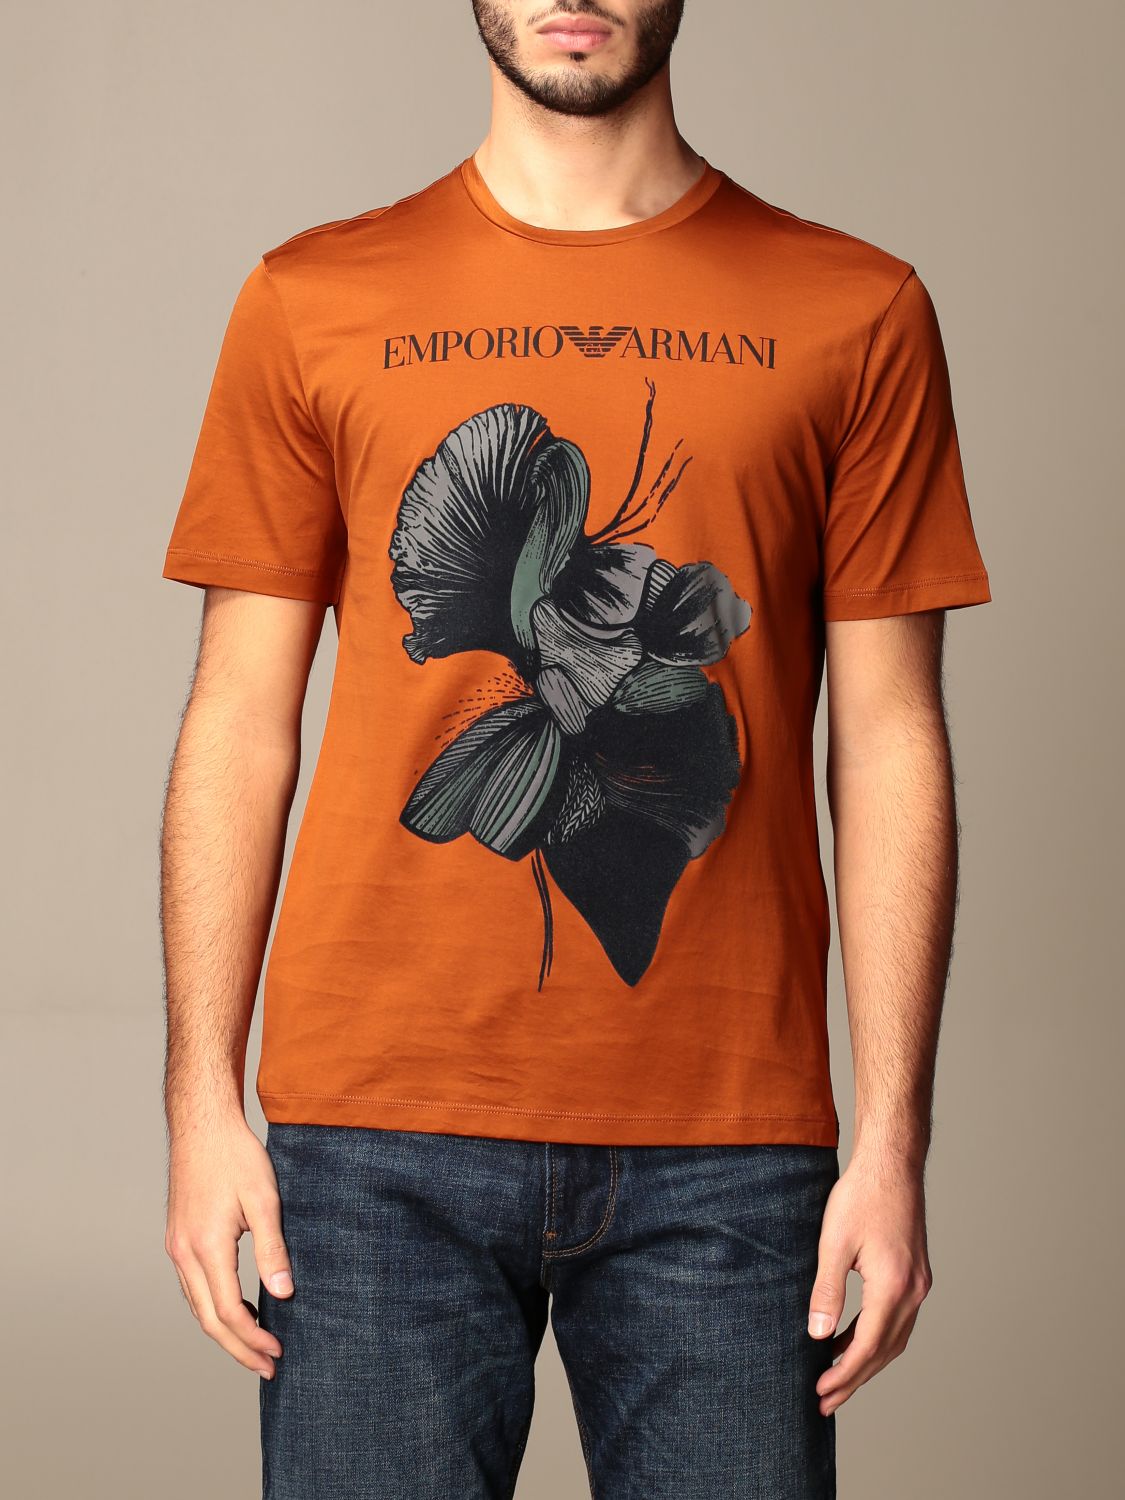 EMPORIO ARMANI: T-shirt with print - Orange | Emporio Armani t-shirt 6H1T6P  1JQ3Z online on 